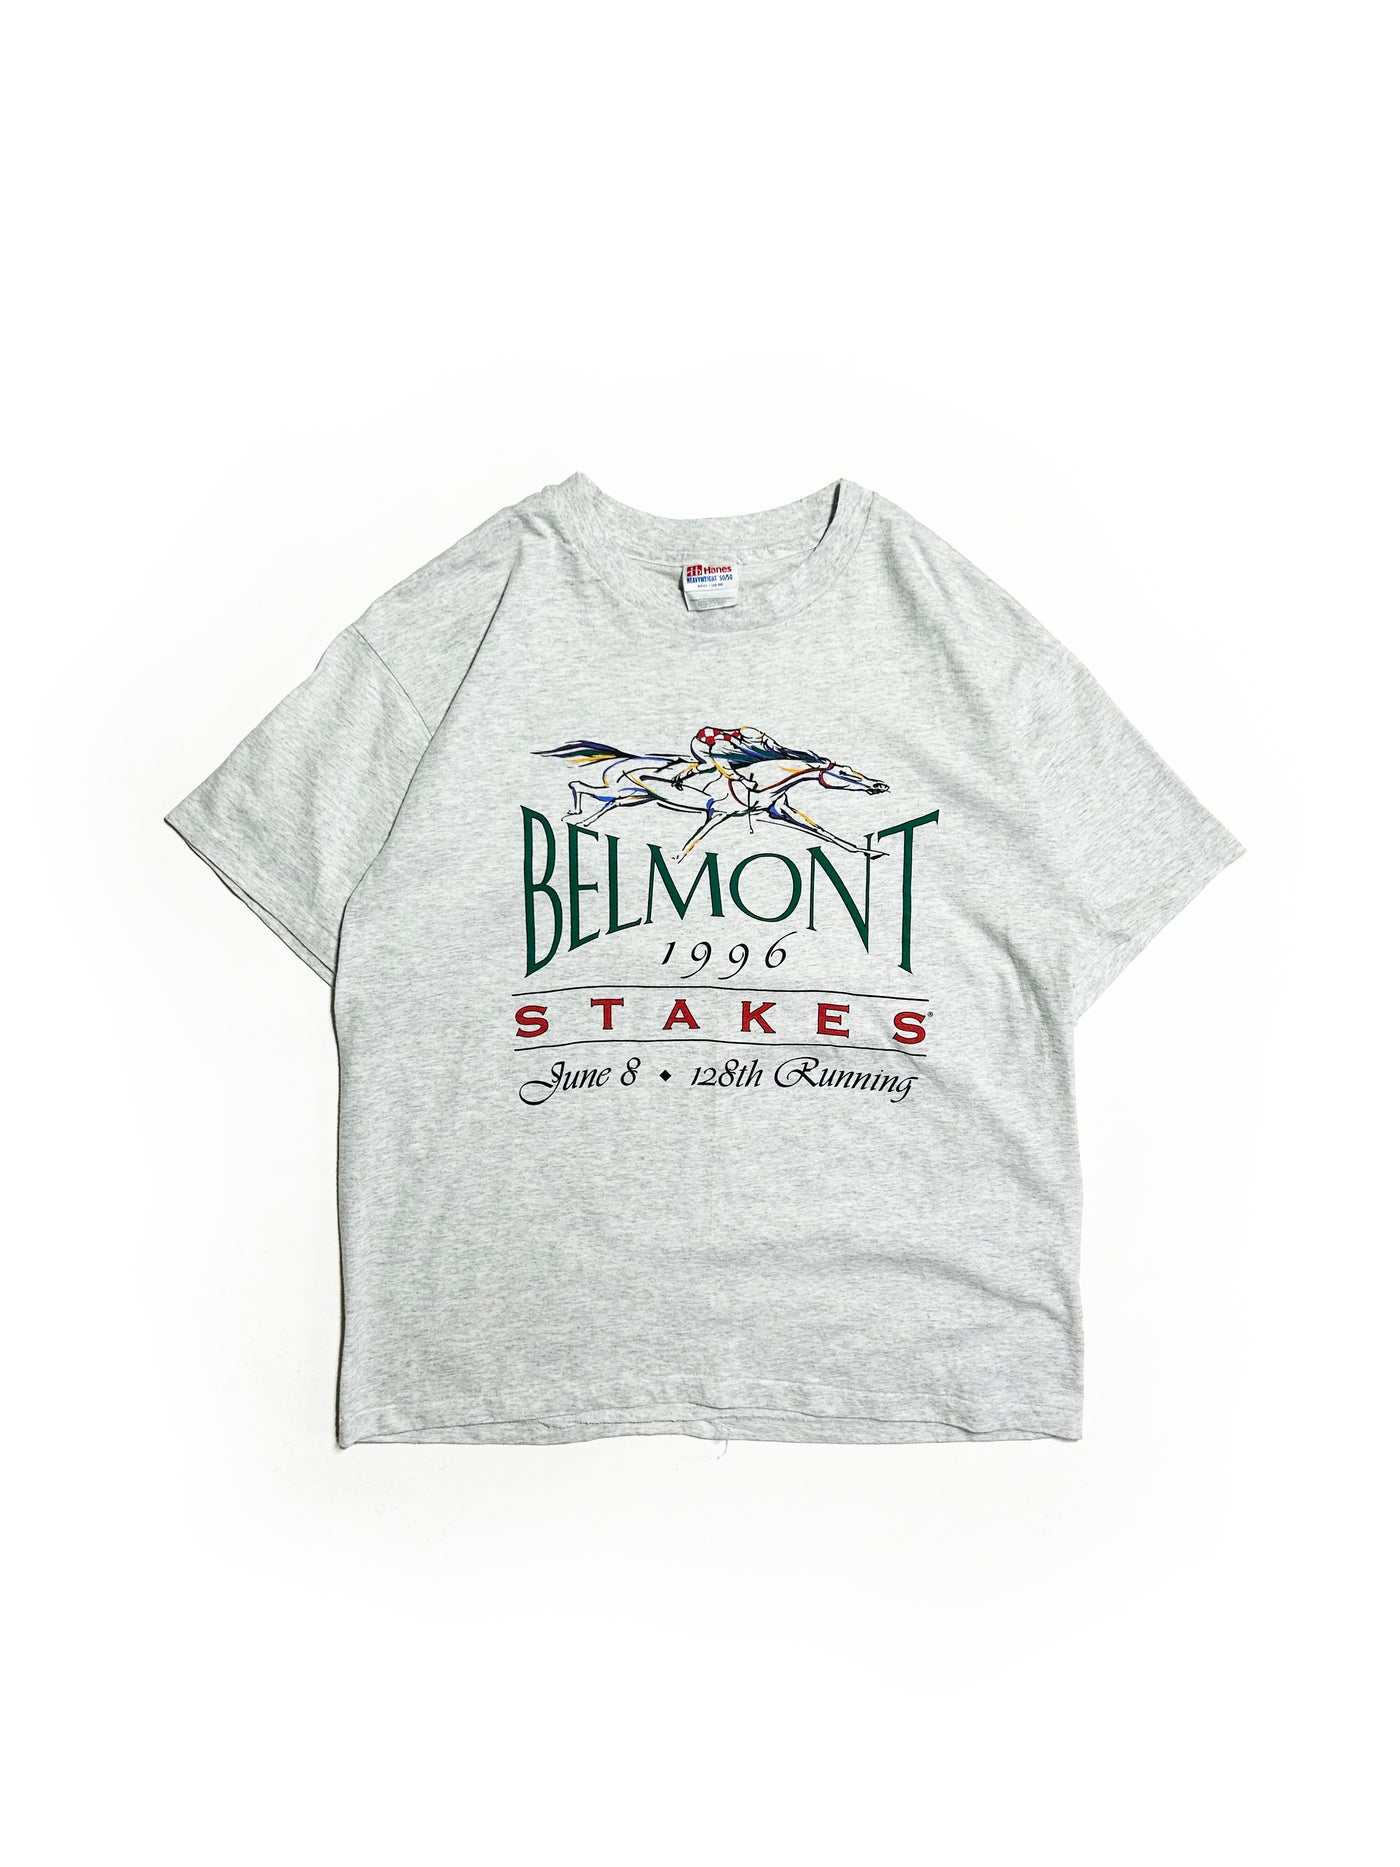 Vintage 1996 Belmont Stakes T-Shirt